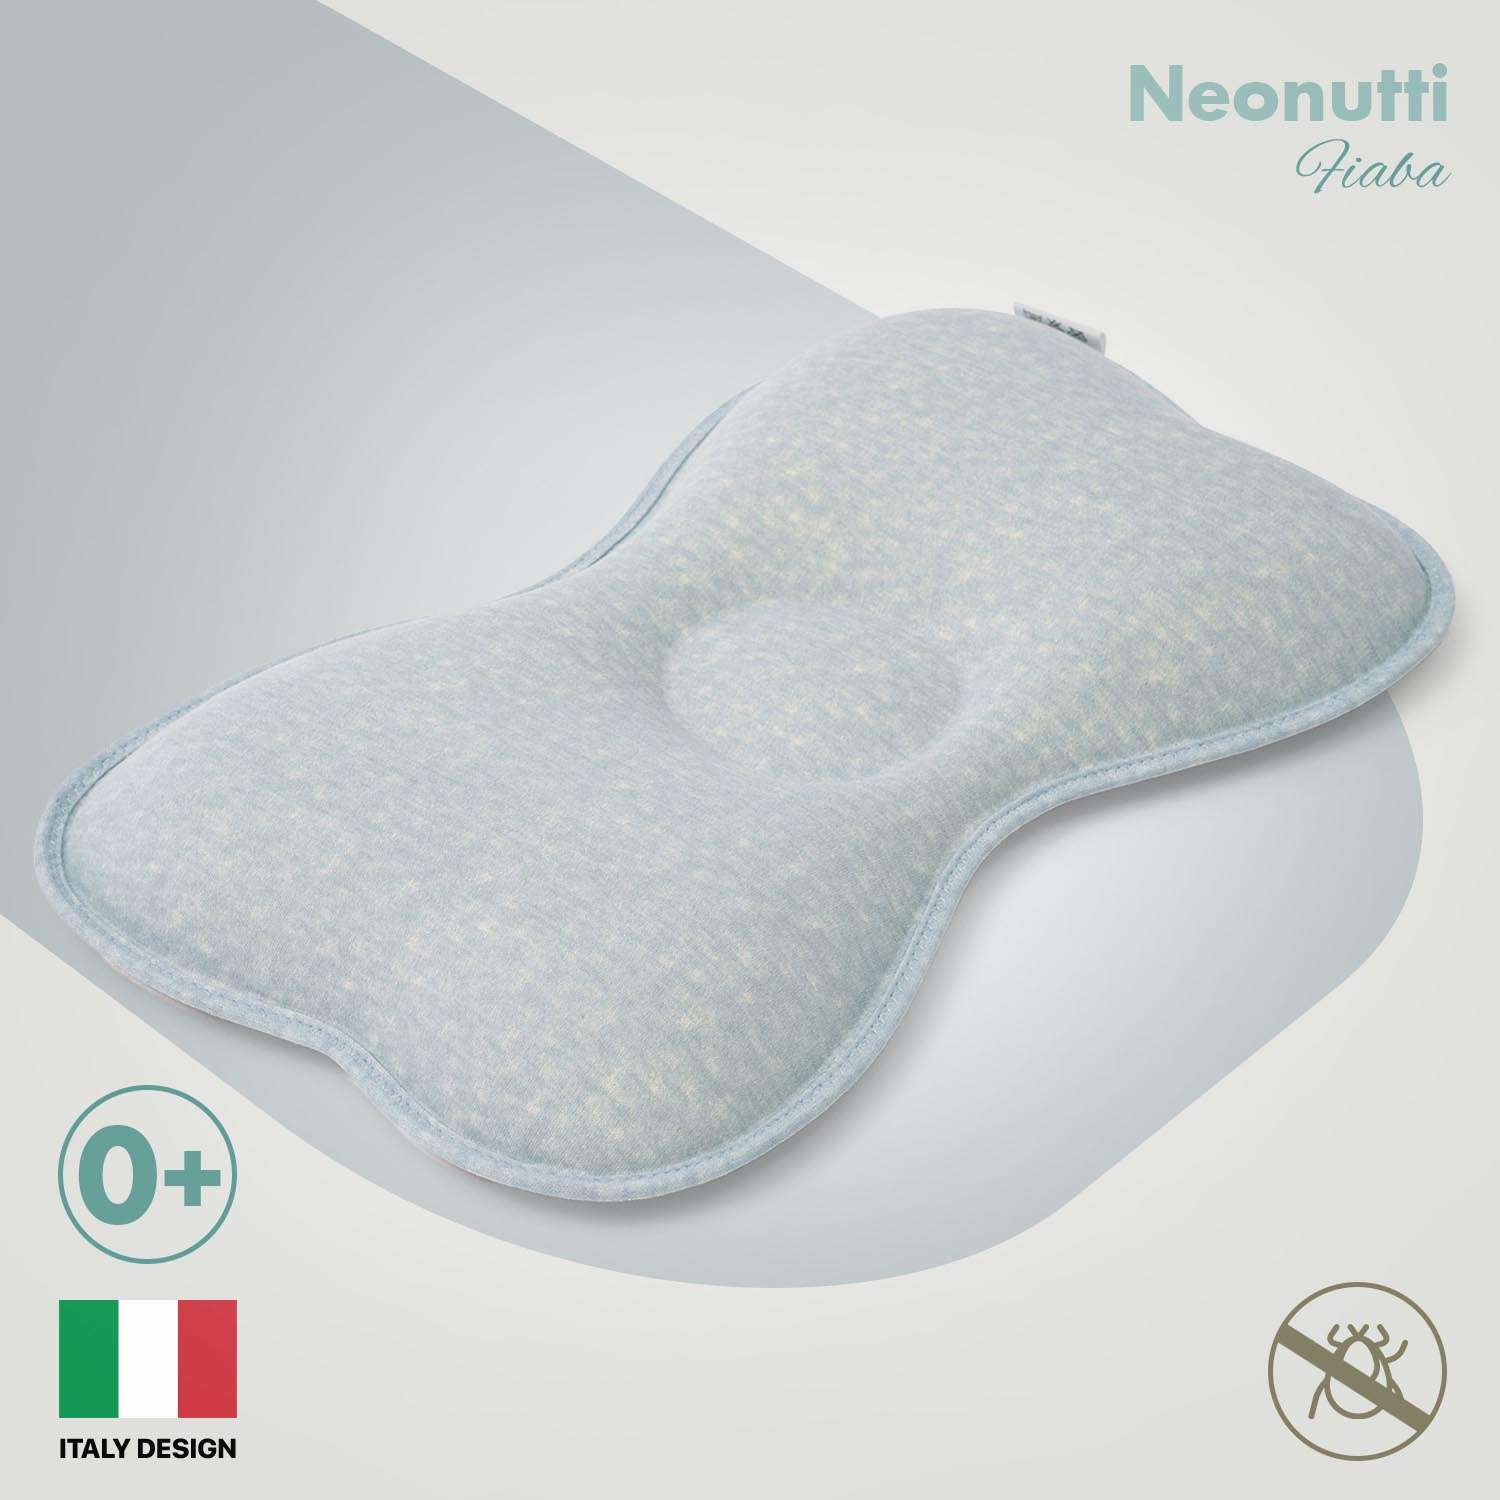 Подушка для новорожденного Nuovita Neonutti Fiaba Dipinto Синяя - фото 2